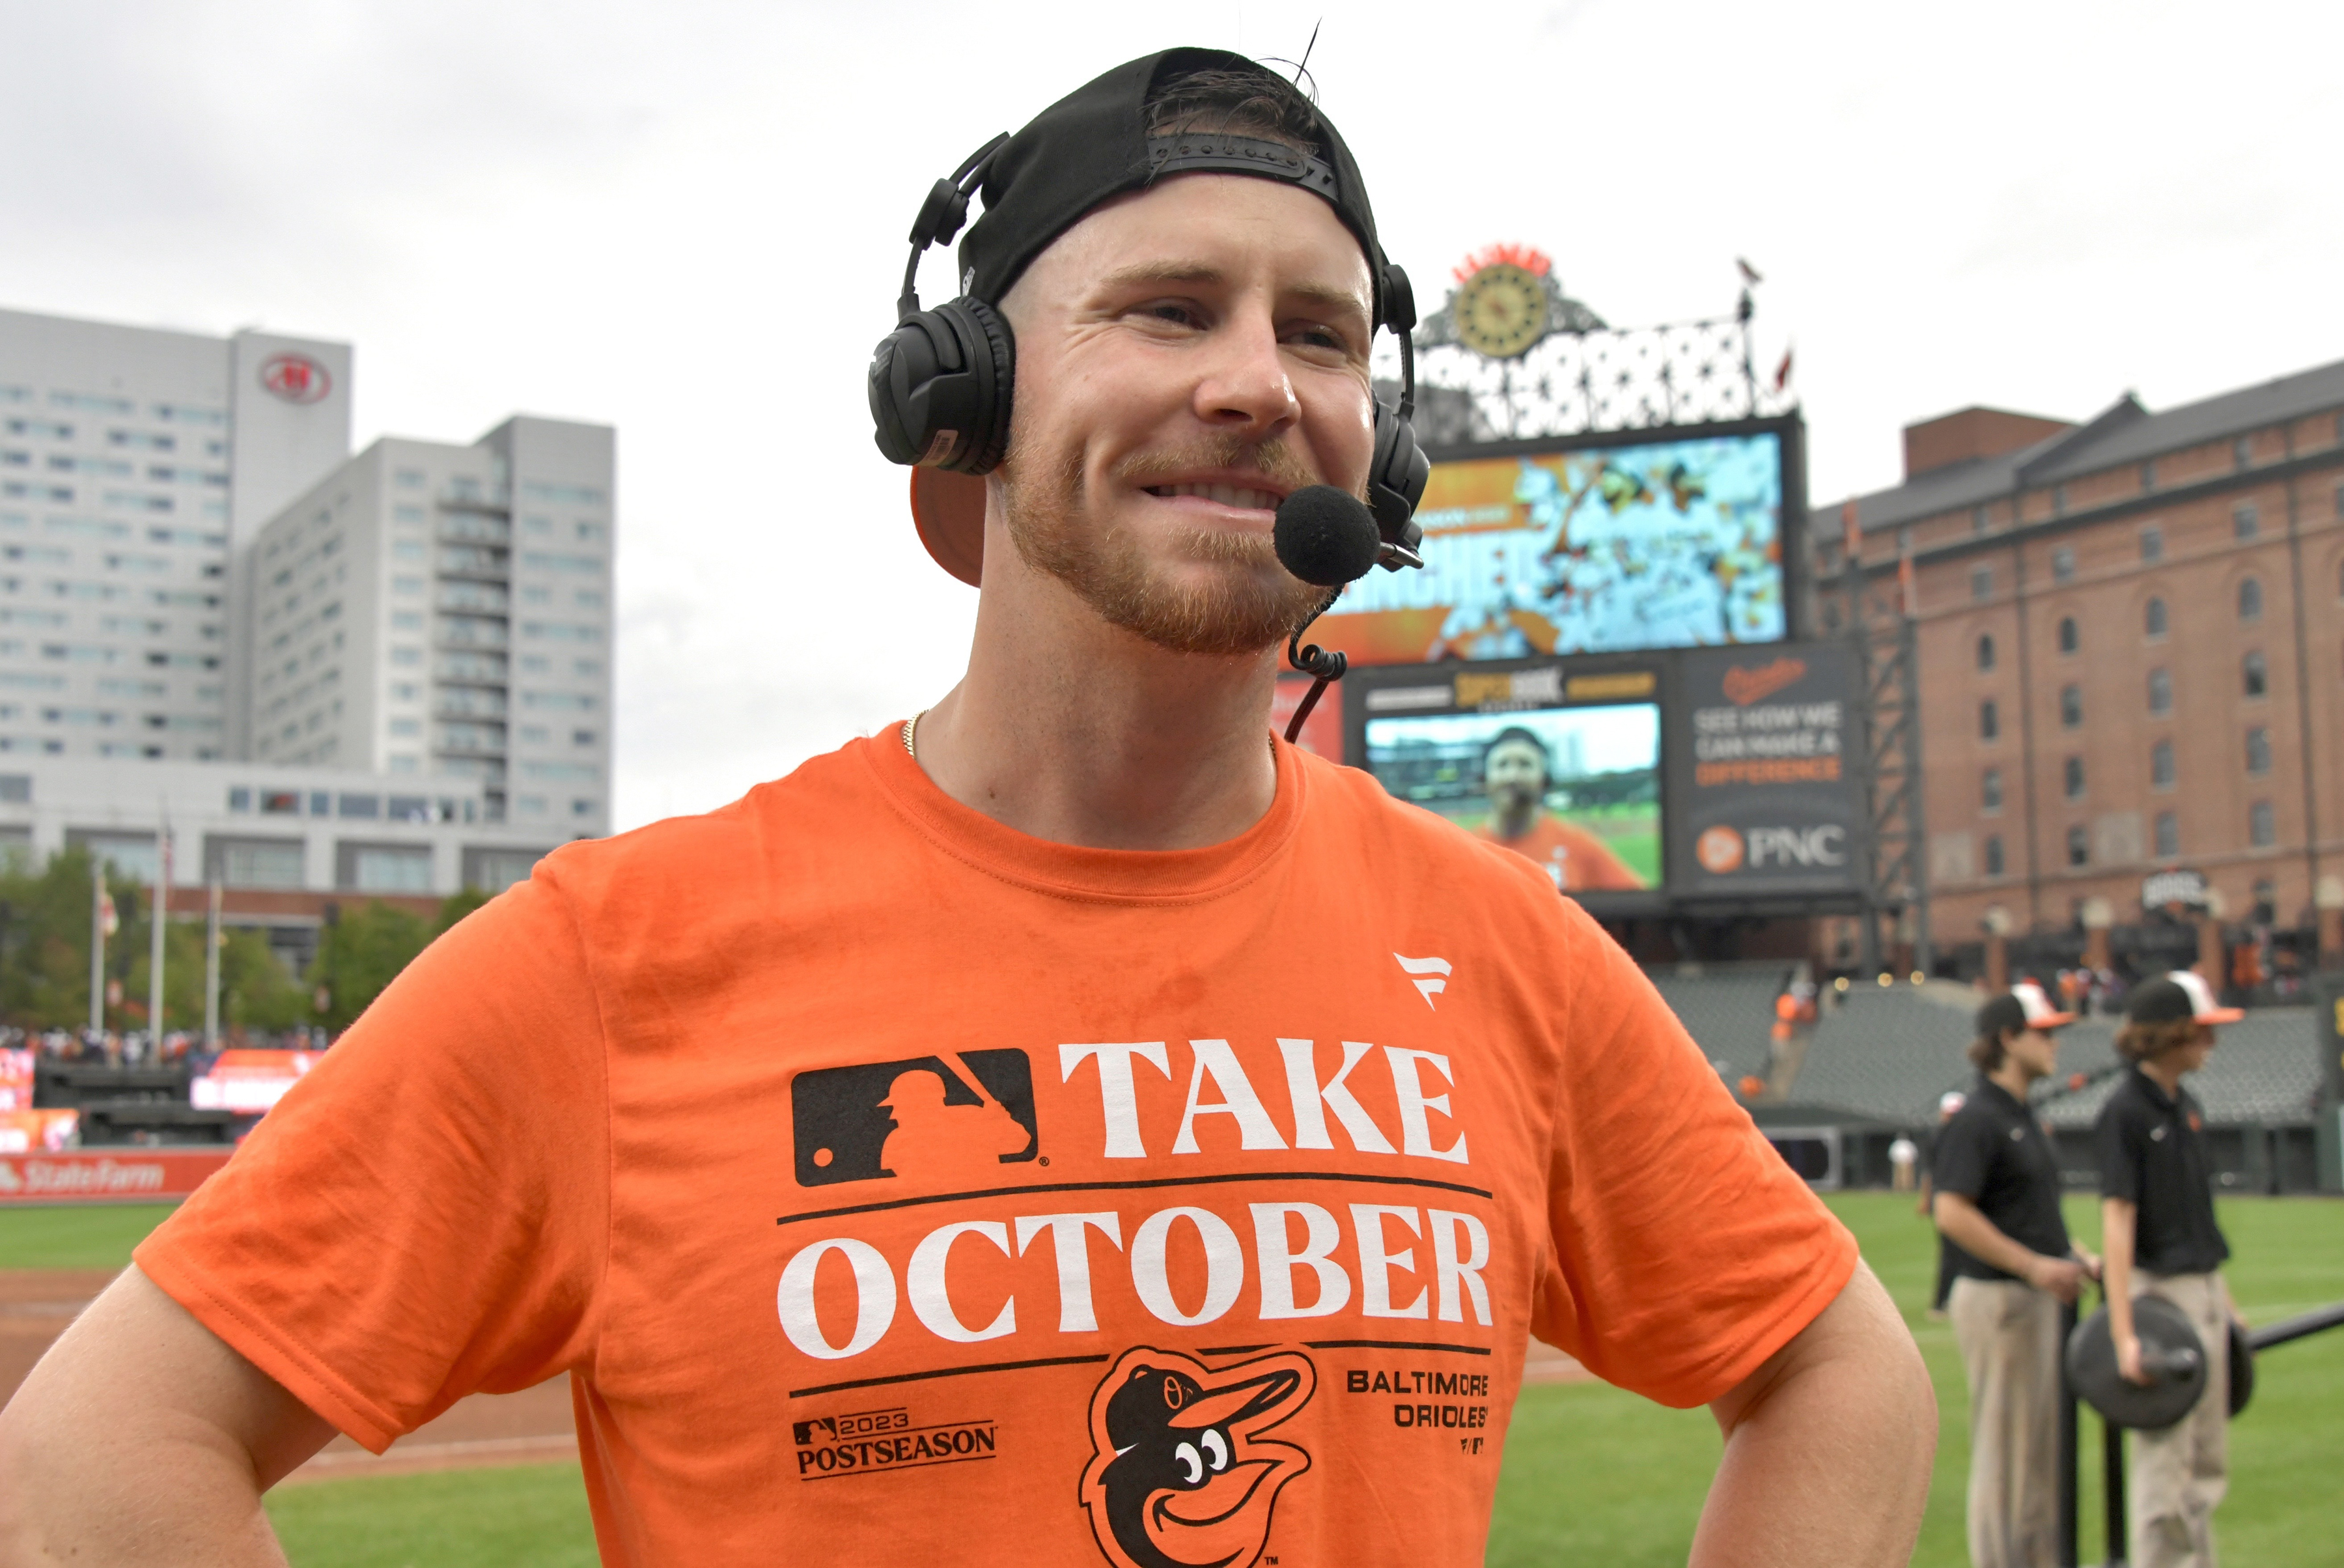 Take October Baltimore Orioles Shirt, Cap -  Worldwide  Shipping